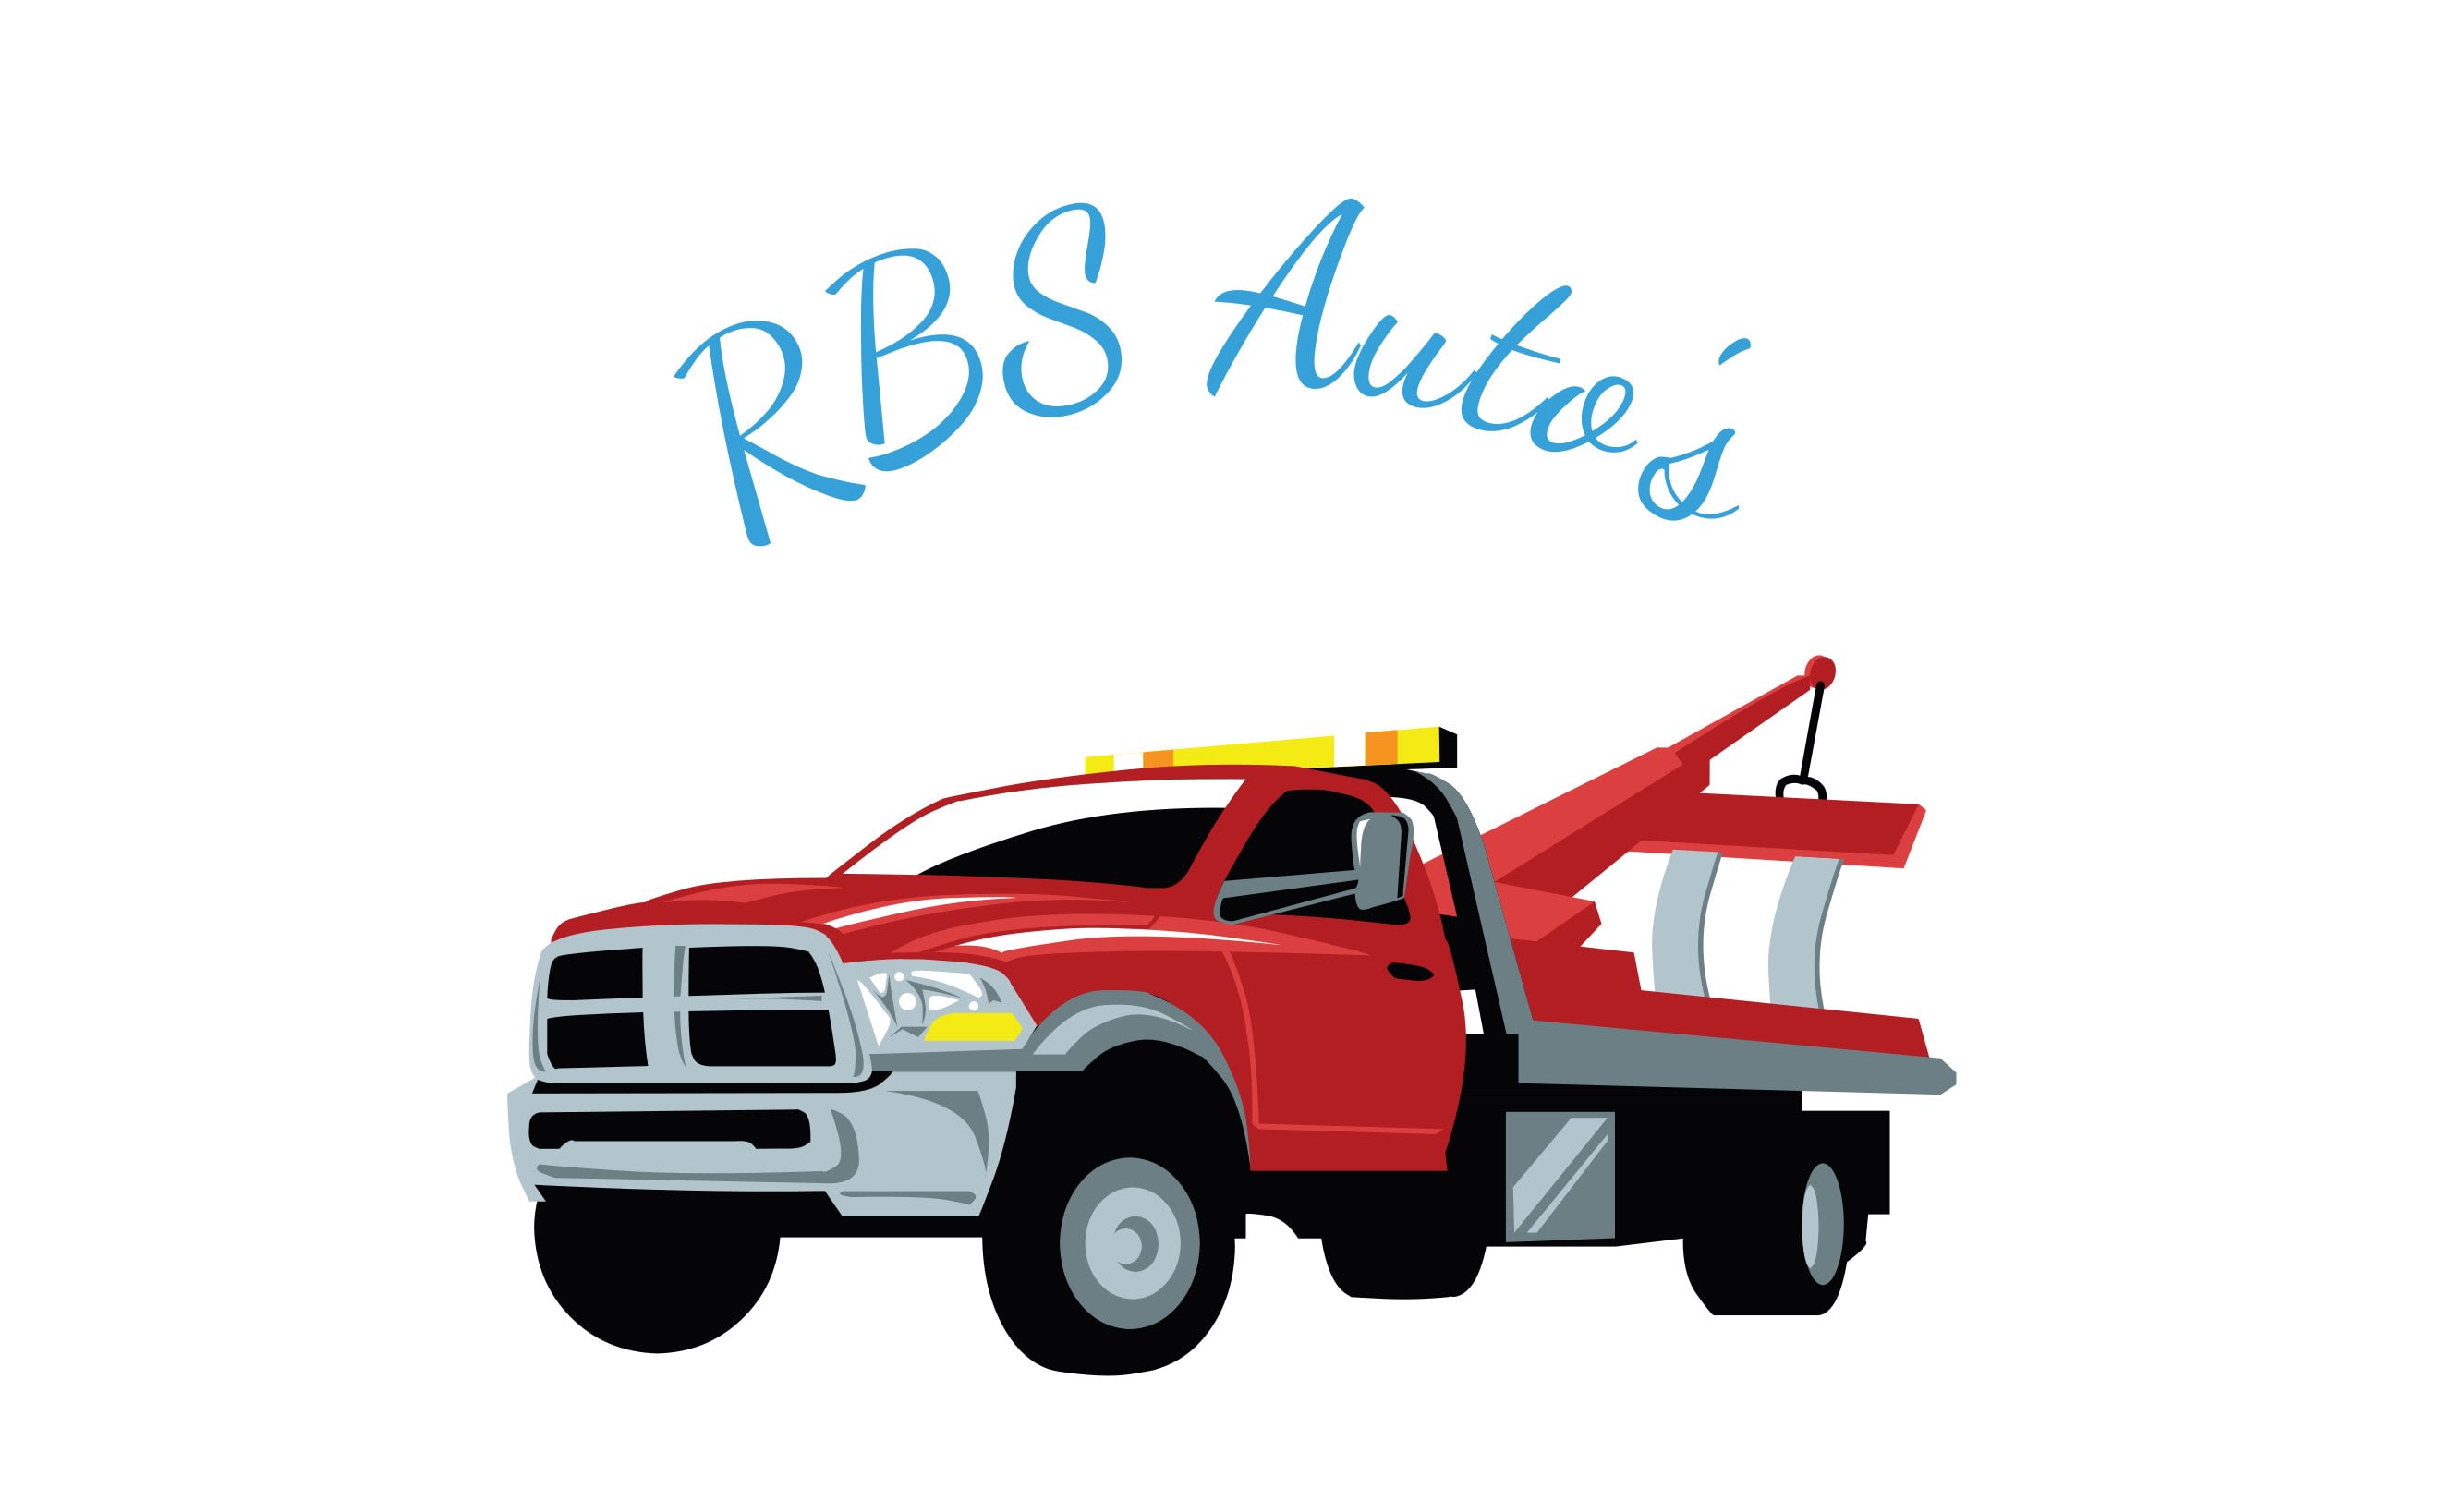 RBS Auto's